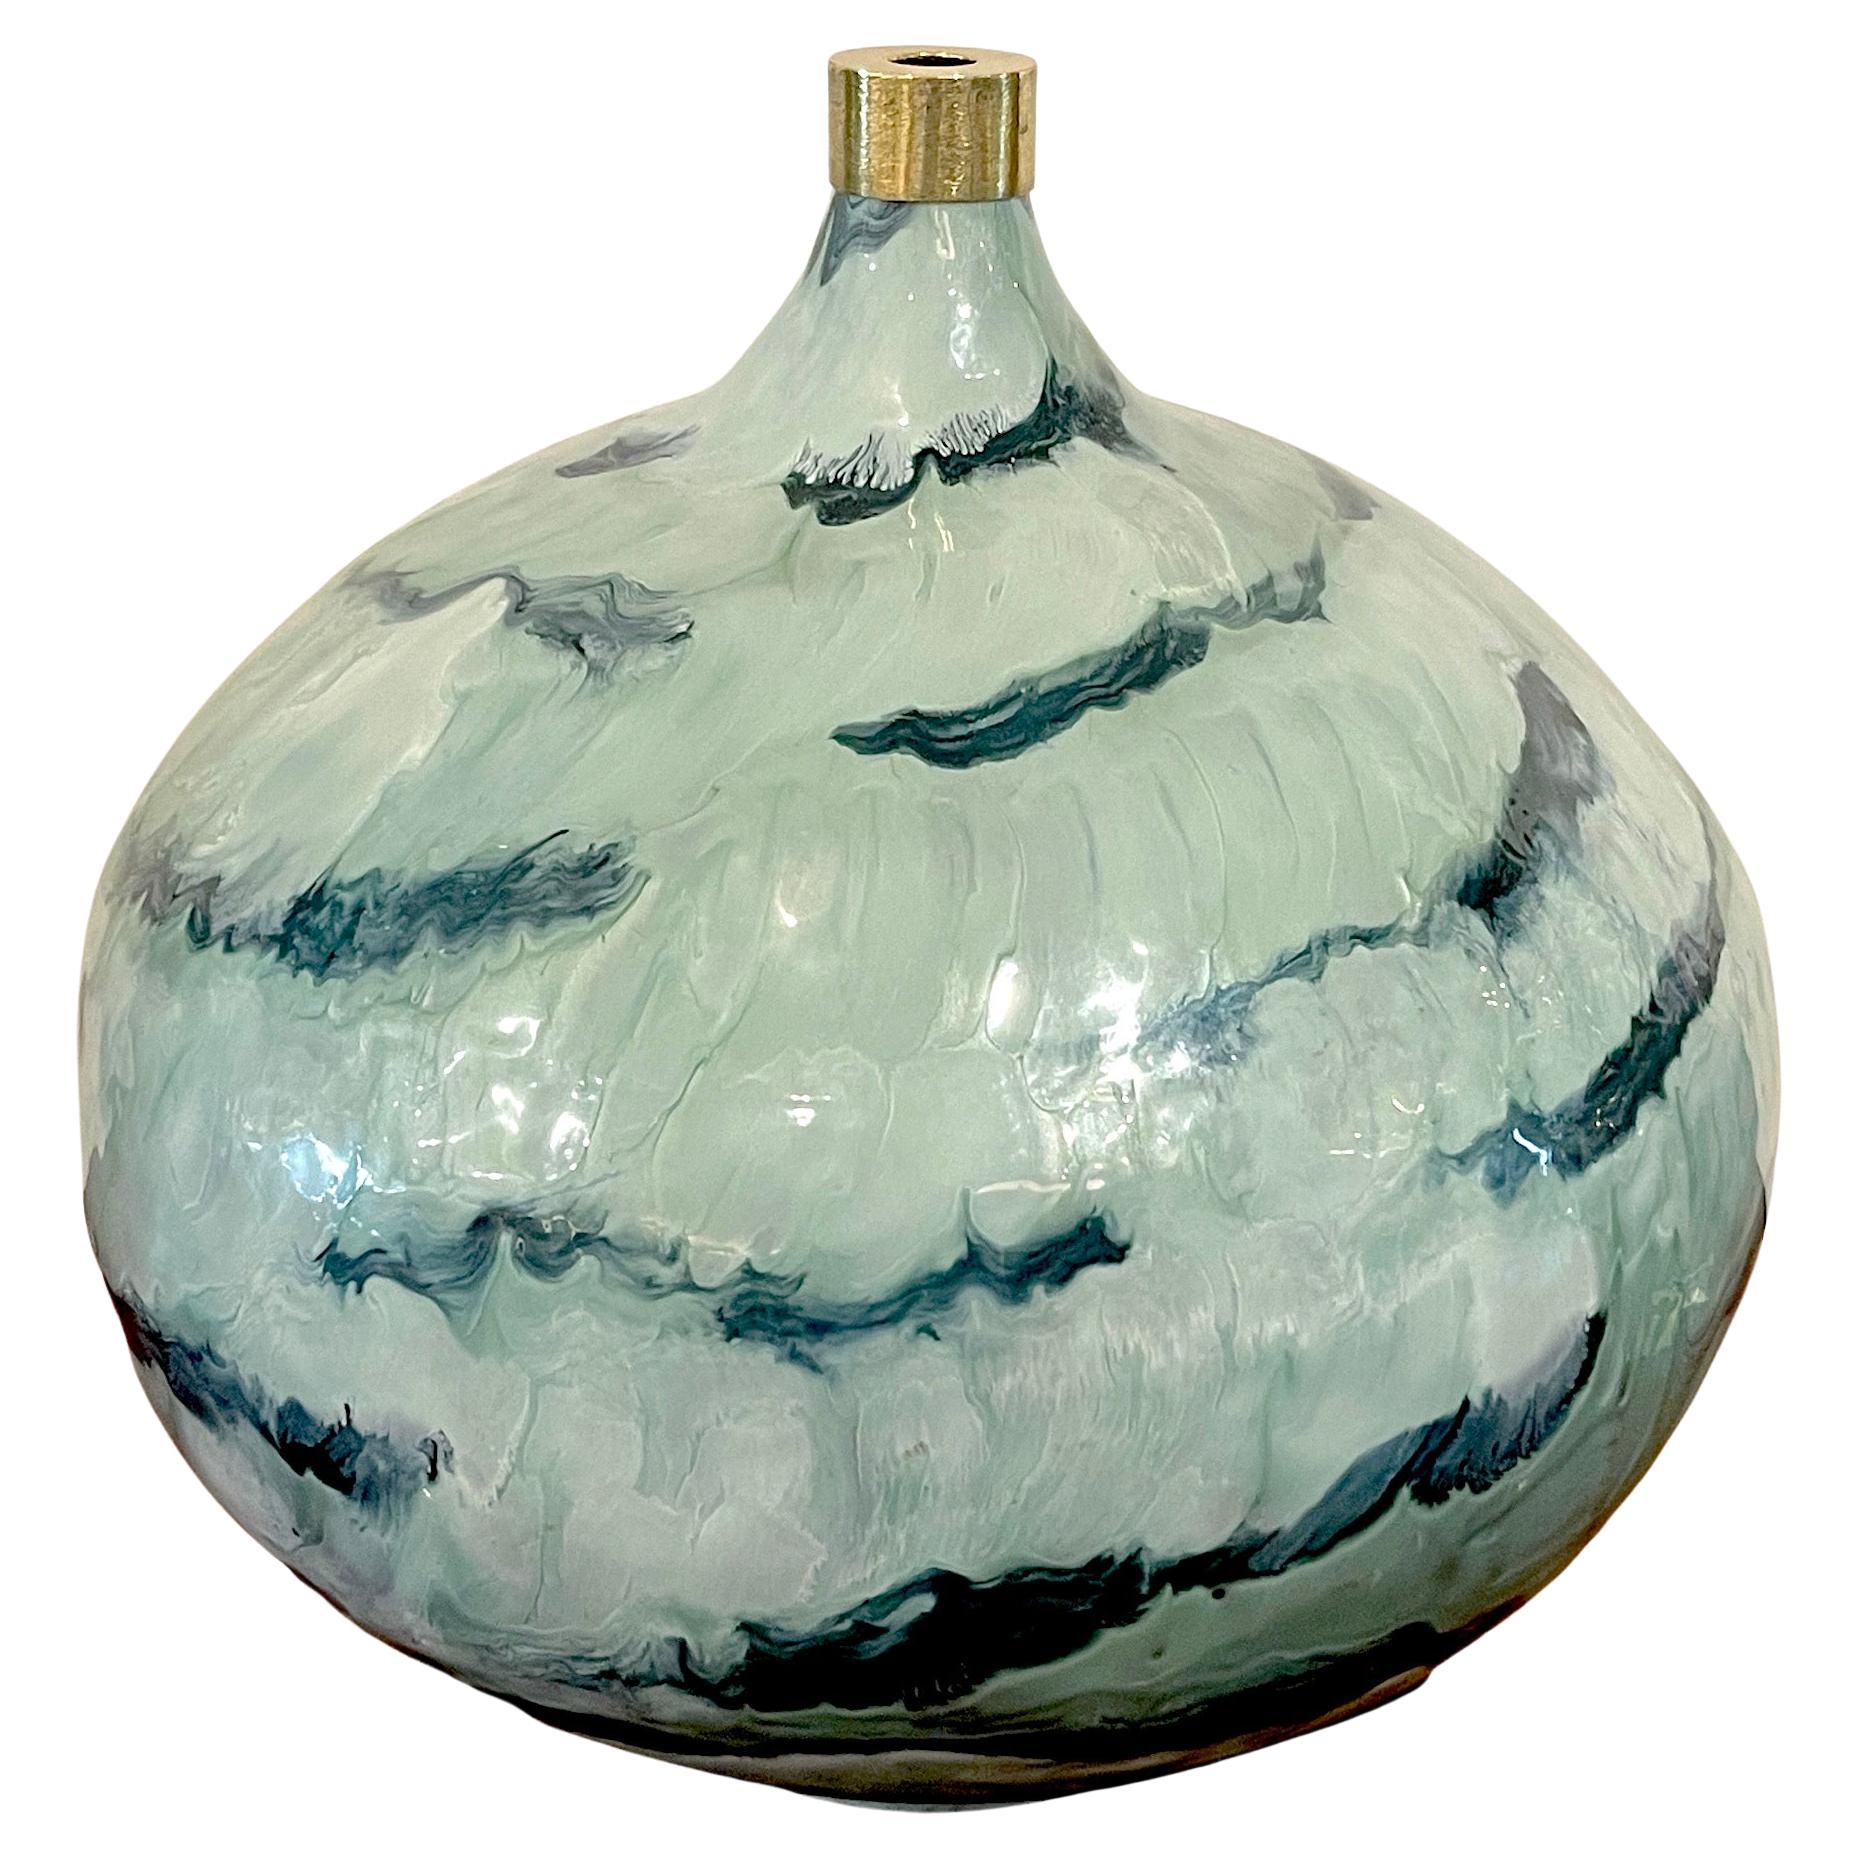 Grand vase gourde moderne français bleu et blanc émaillé